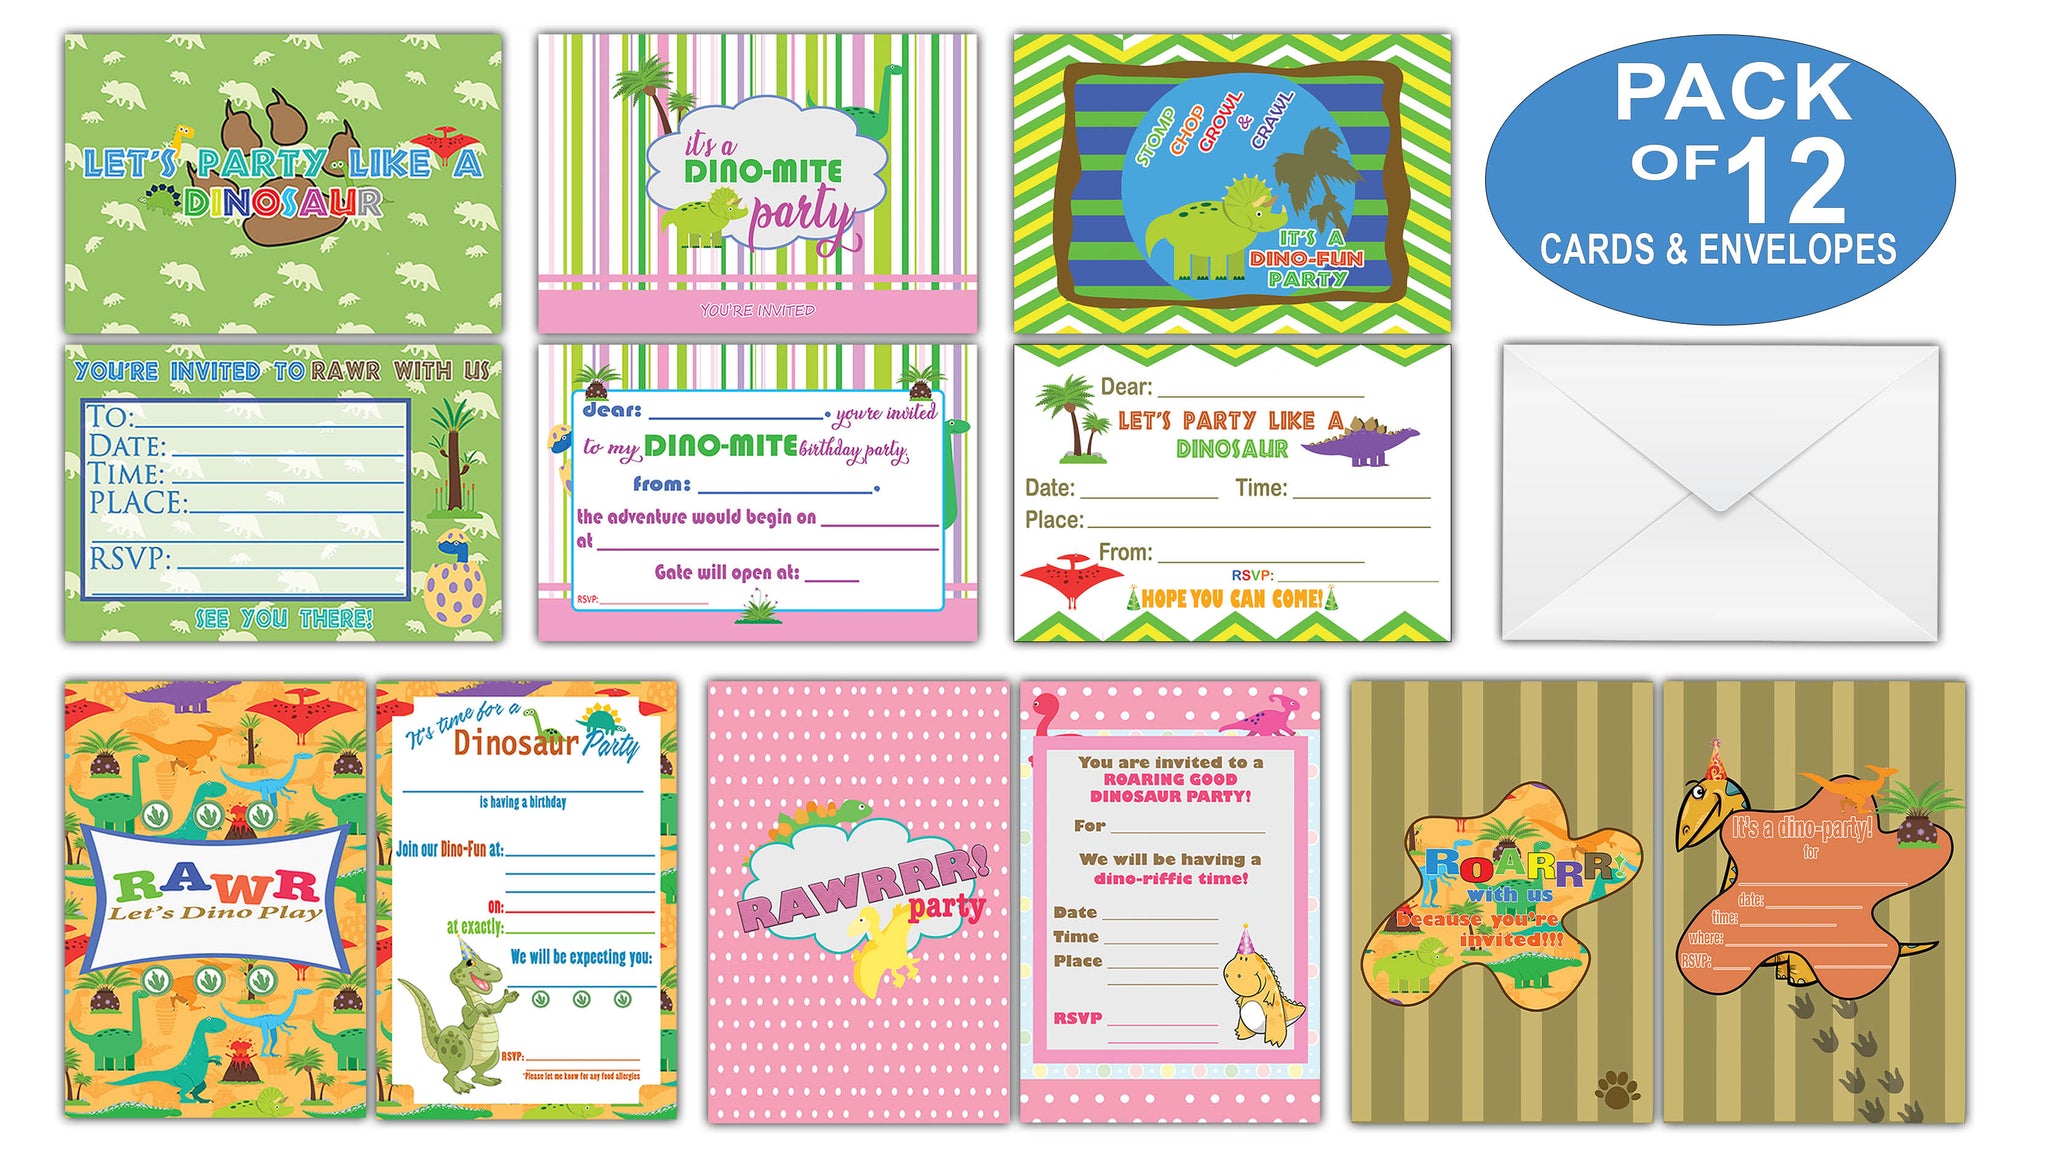 Creanoso Dinosaur Theme Birthday Invitation Cards (12-Pack) - Great Gift Card for Boys, Girls, Kids